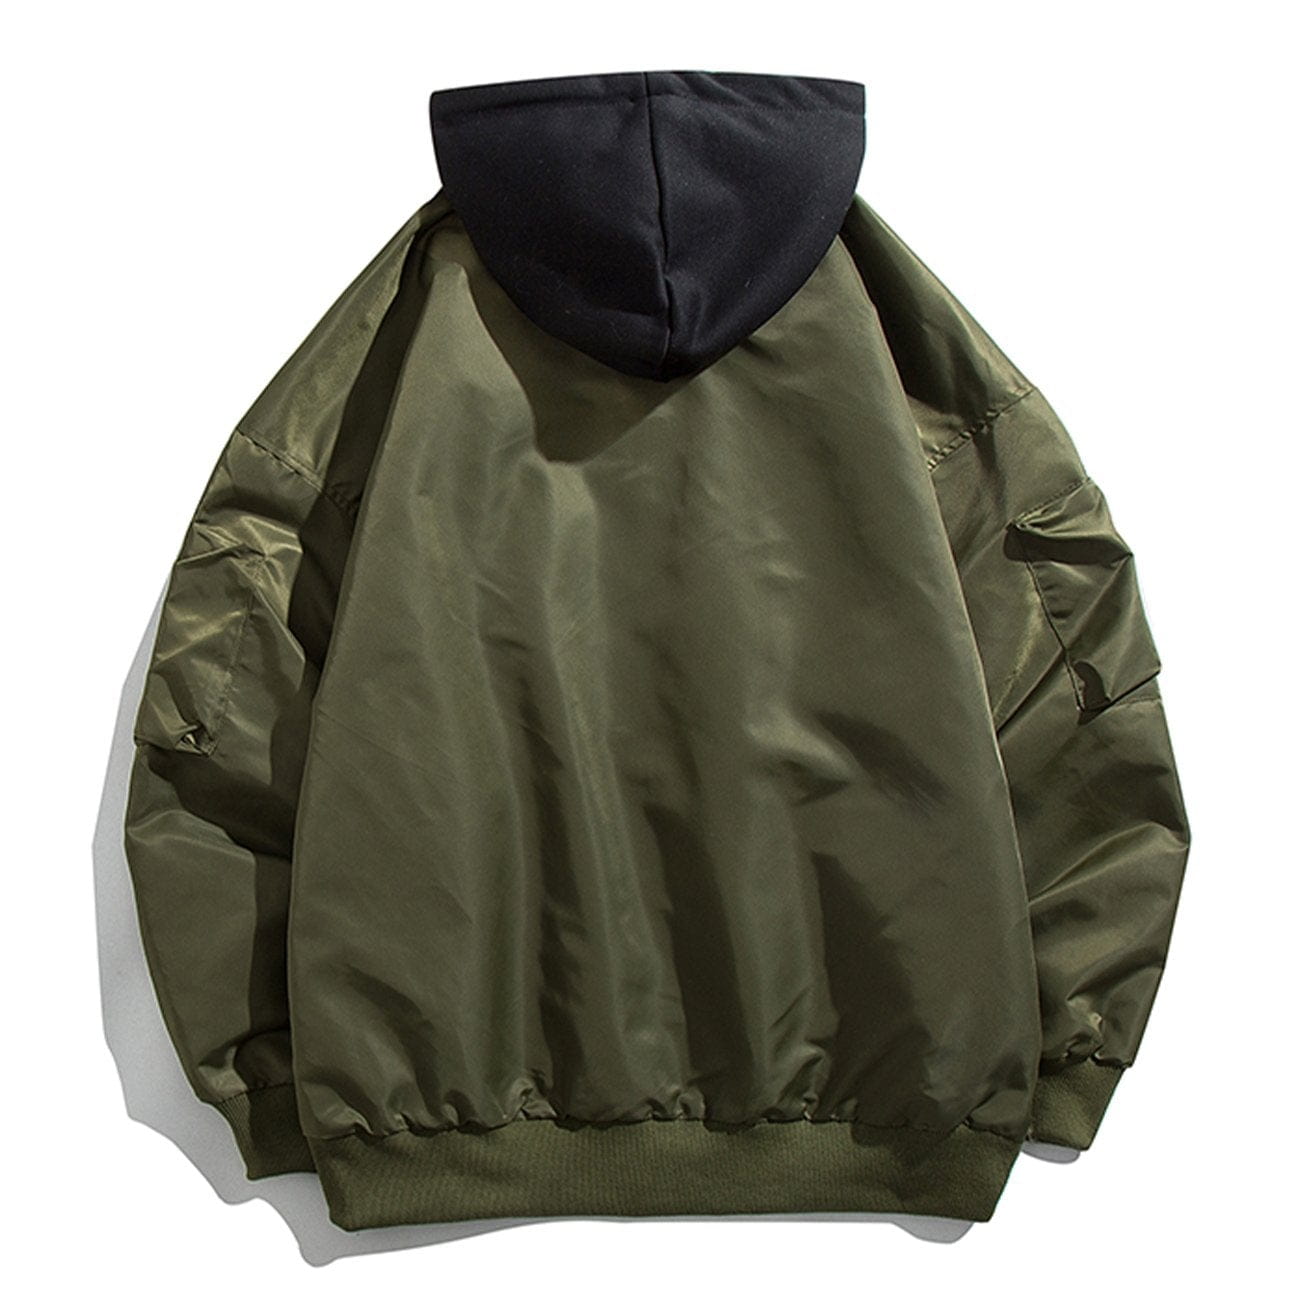 Majesda® - Letter Contrast Hooded Jacket outfit ideas, streetwear fashion - majesda.com